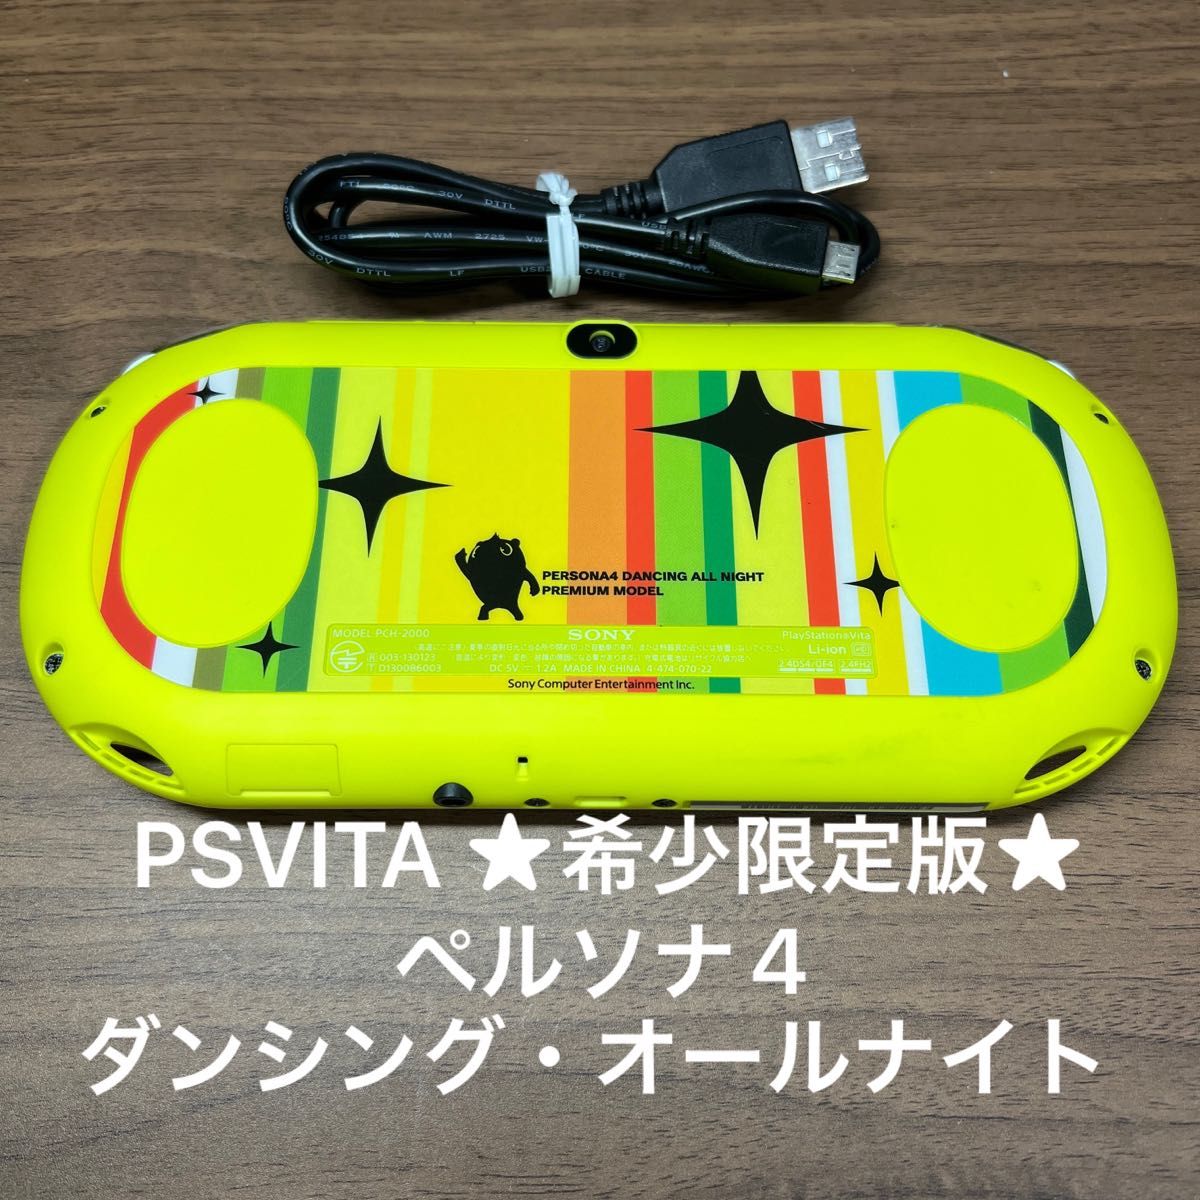 PlayStation®Vita ペルソナ4 ダンシング・オールナイト プレミ… abitur